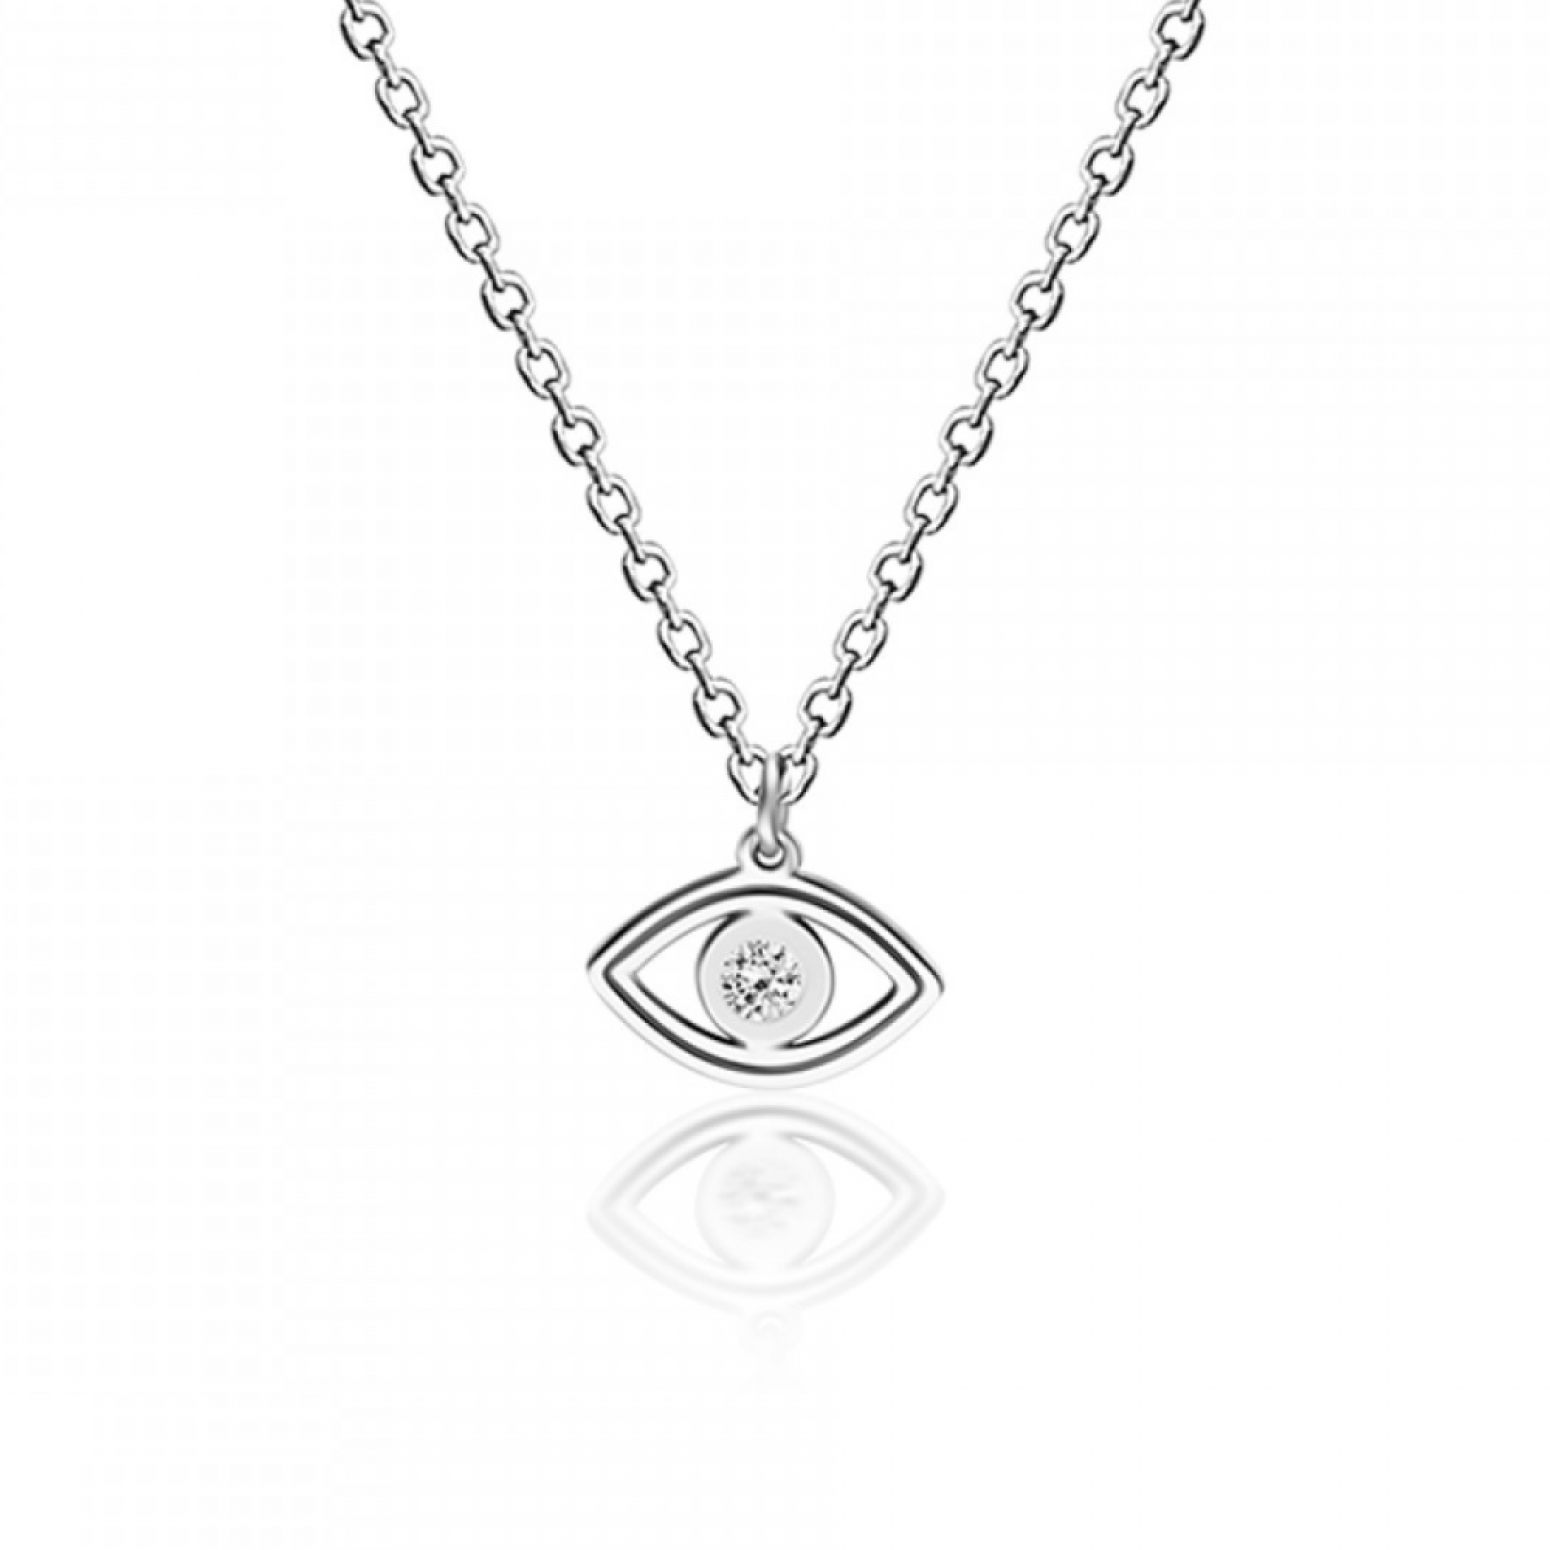 Eye necklace, Κ14 white gold with diamond 0.02ct, VS2, H ko5317 NECKLACES Κοσμηματα - chrilia.gr